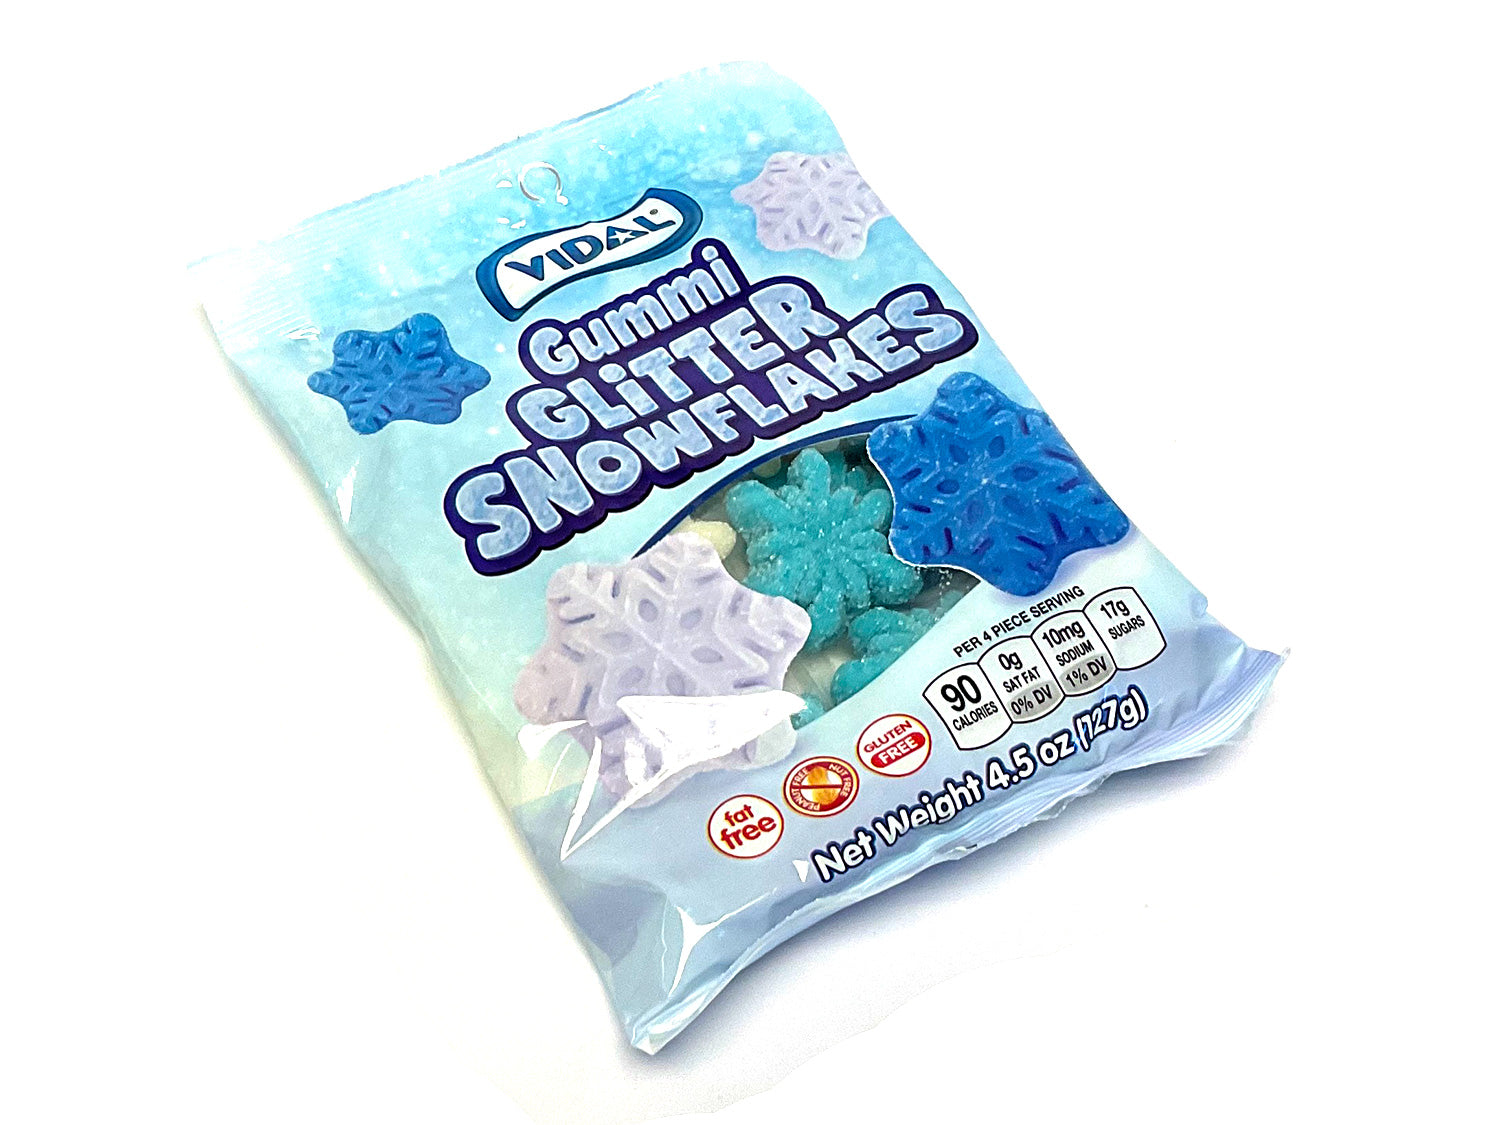 Gummi Glitter Snowflakes - 4.5 oz bag